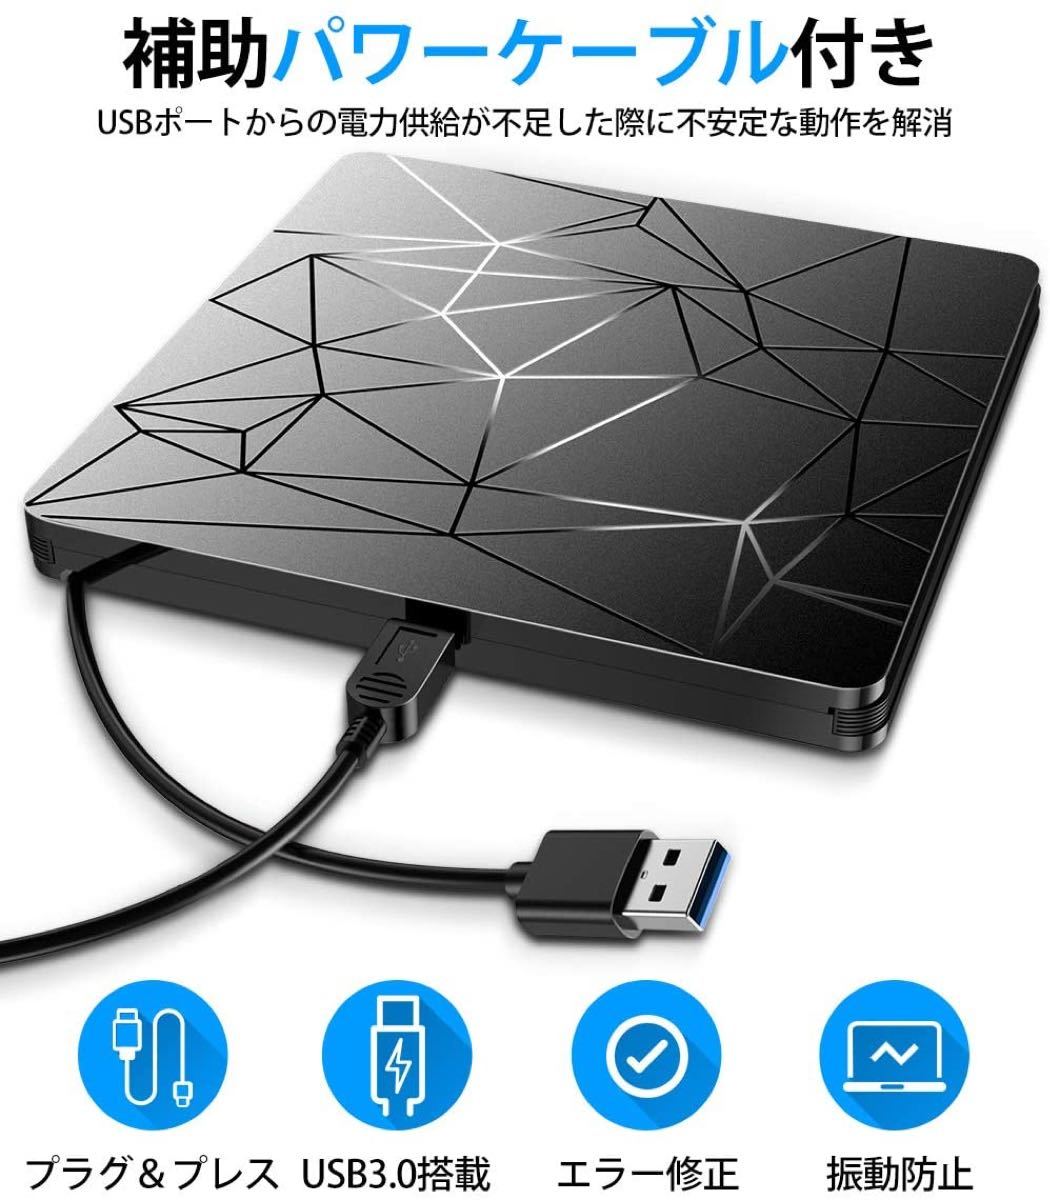 DVDドライブ 外付け 【進化バージョン USB3.0】 静音 高速 軽量日本語取扱説明書付